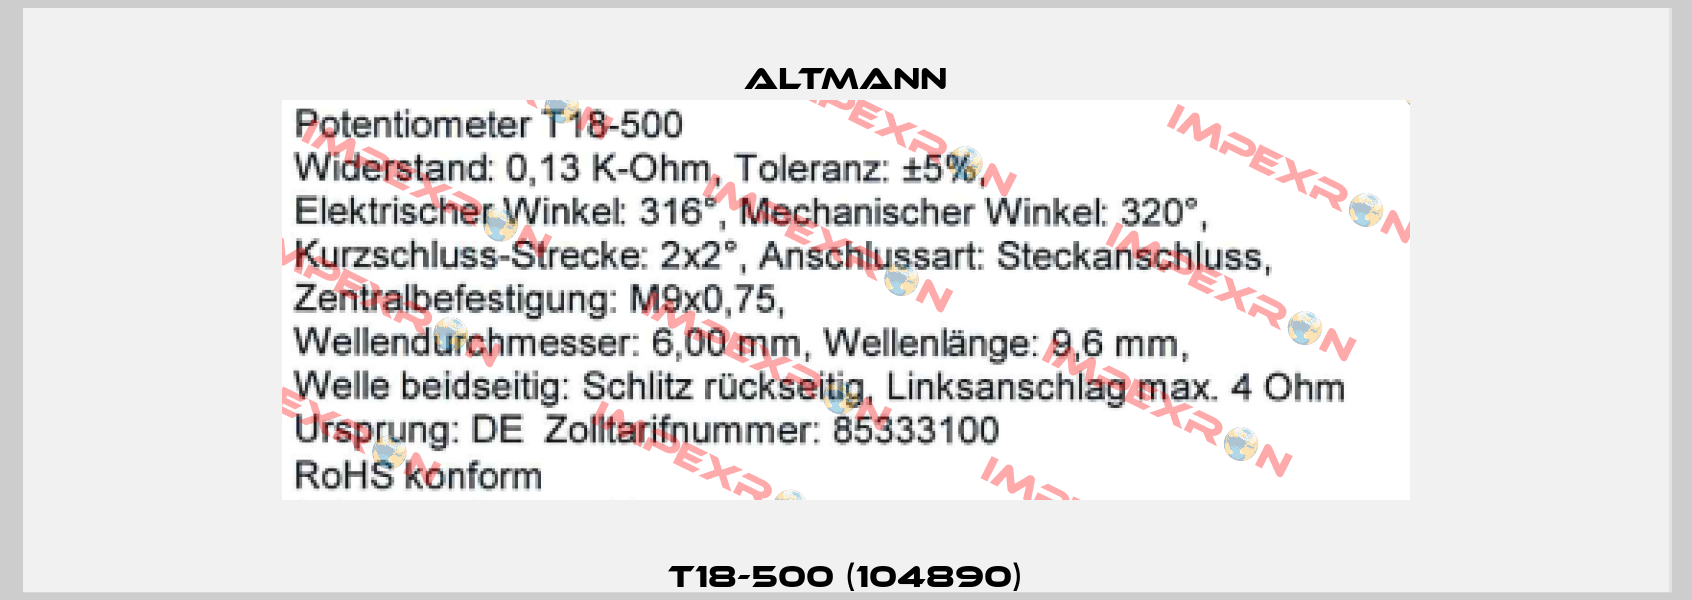 T18-500 (104890) ALTMANN